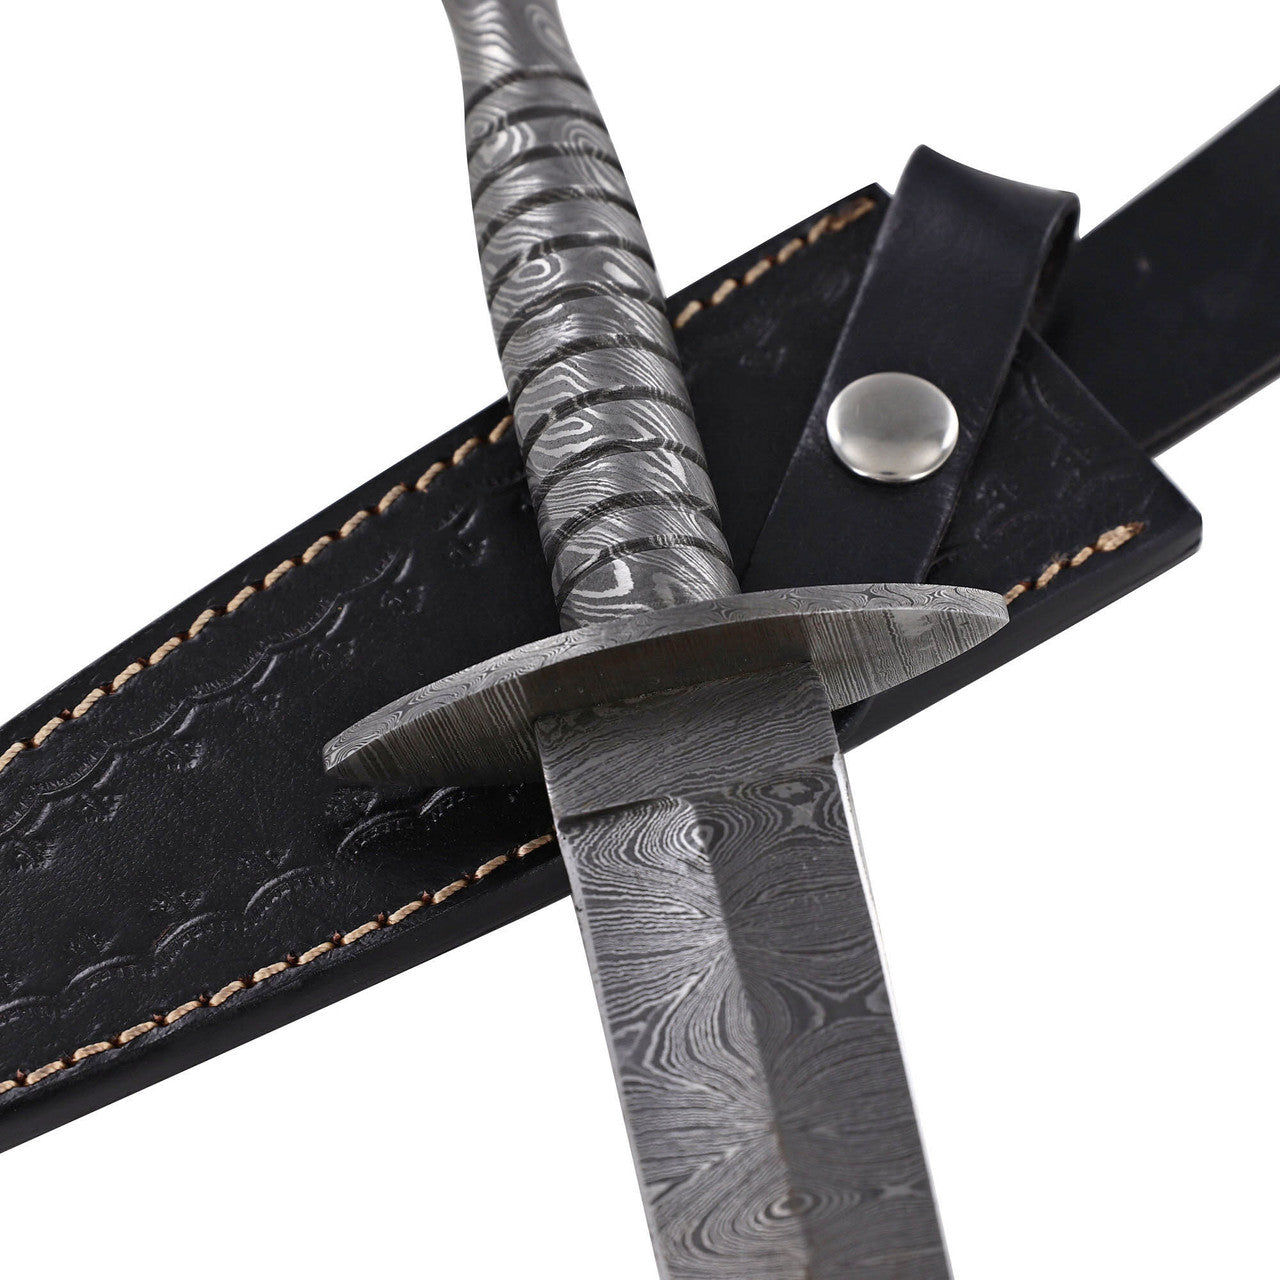 Full Damascus Steel Commando Knife with Leather Sheath-2